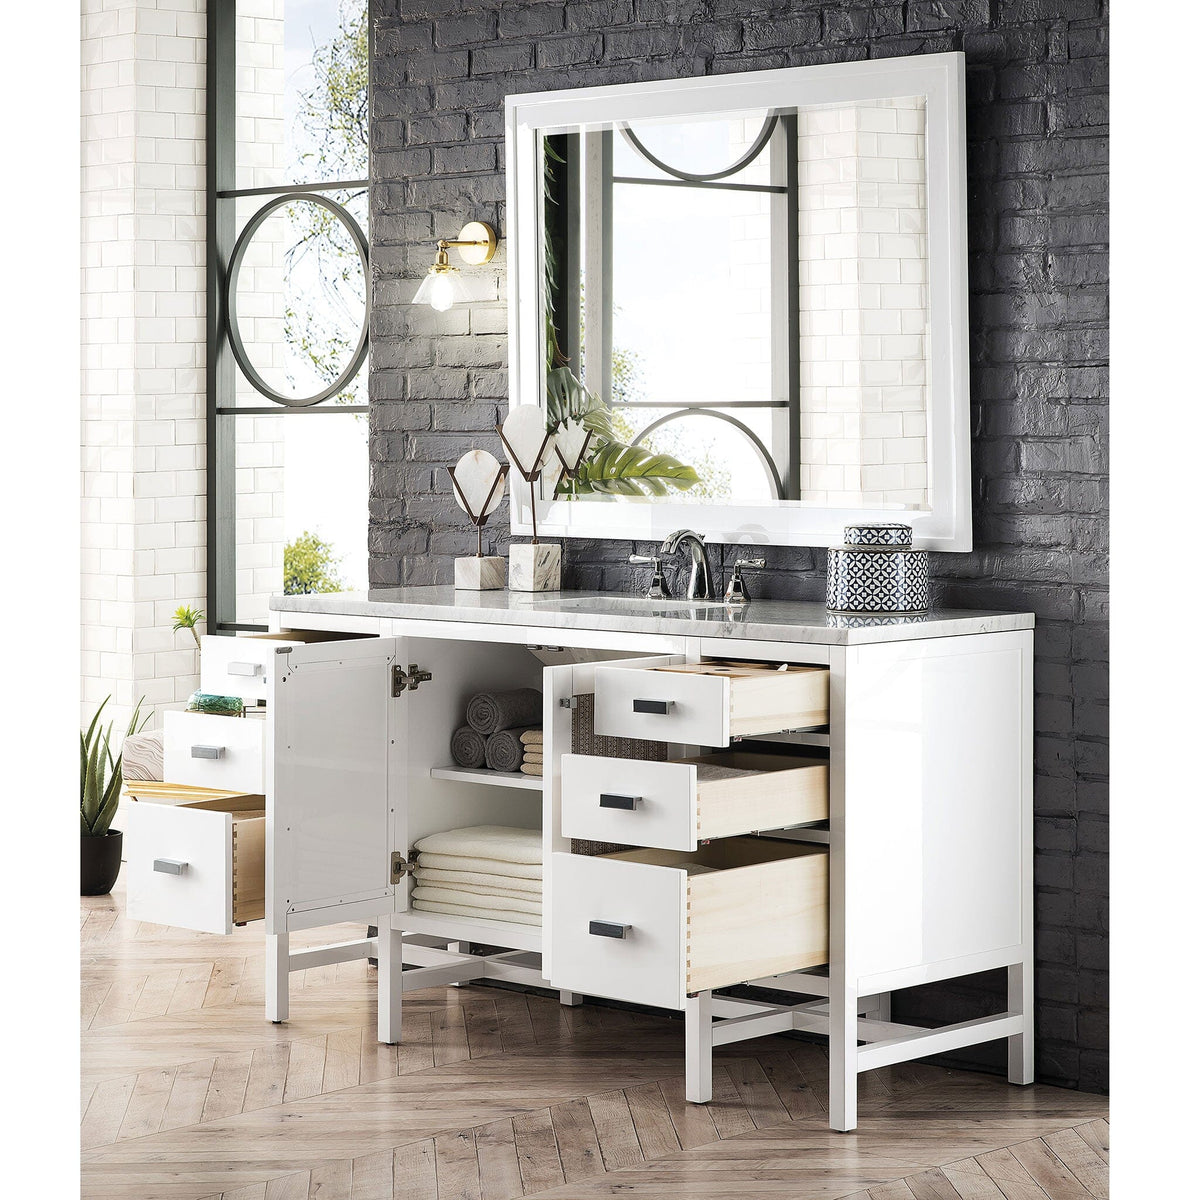 60" Addison Single Vanity Cabinet, Glossy White